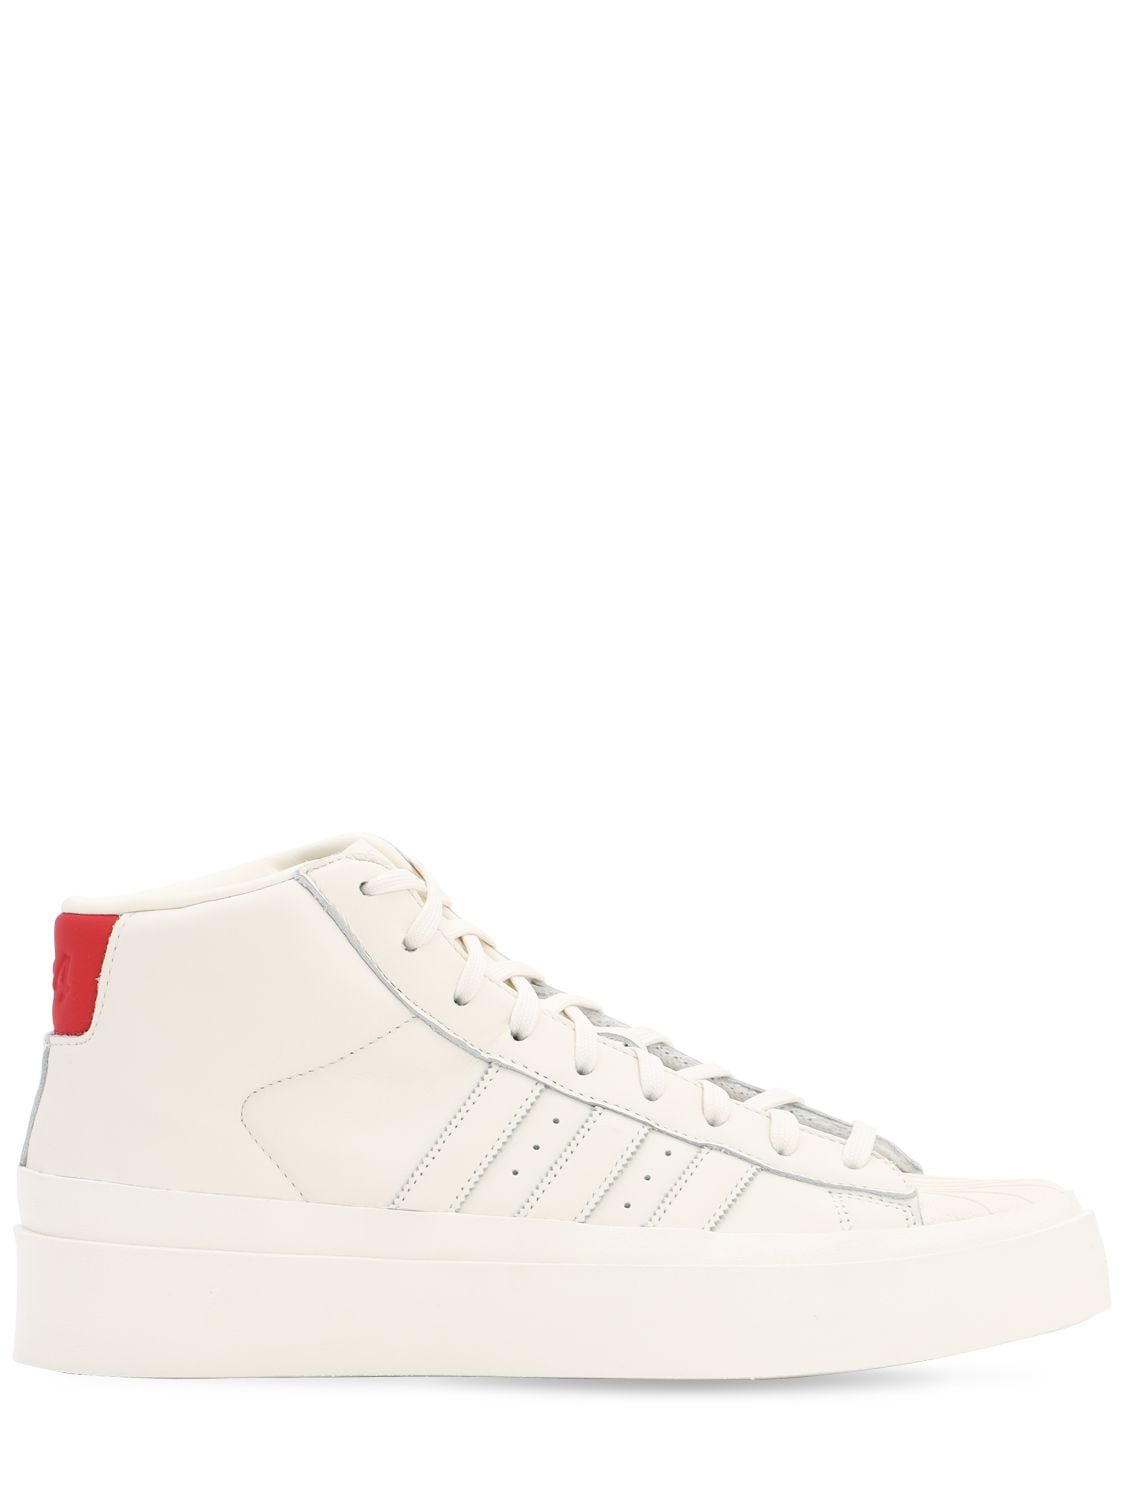 Adidas Originals Statement Pro Model 80s Sneakers In Chalk White